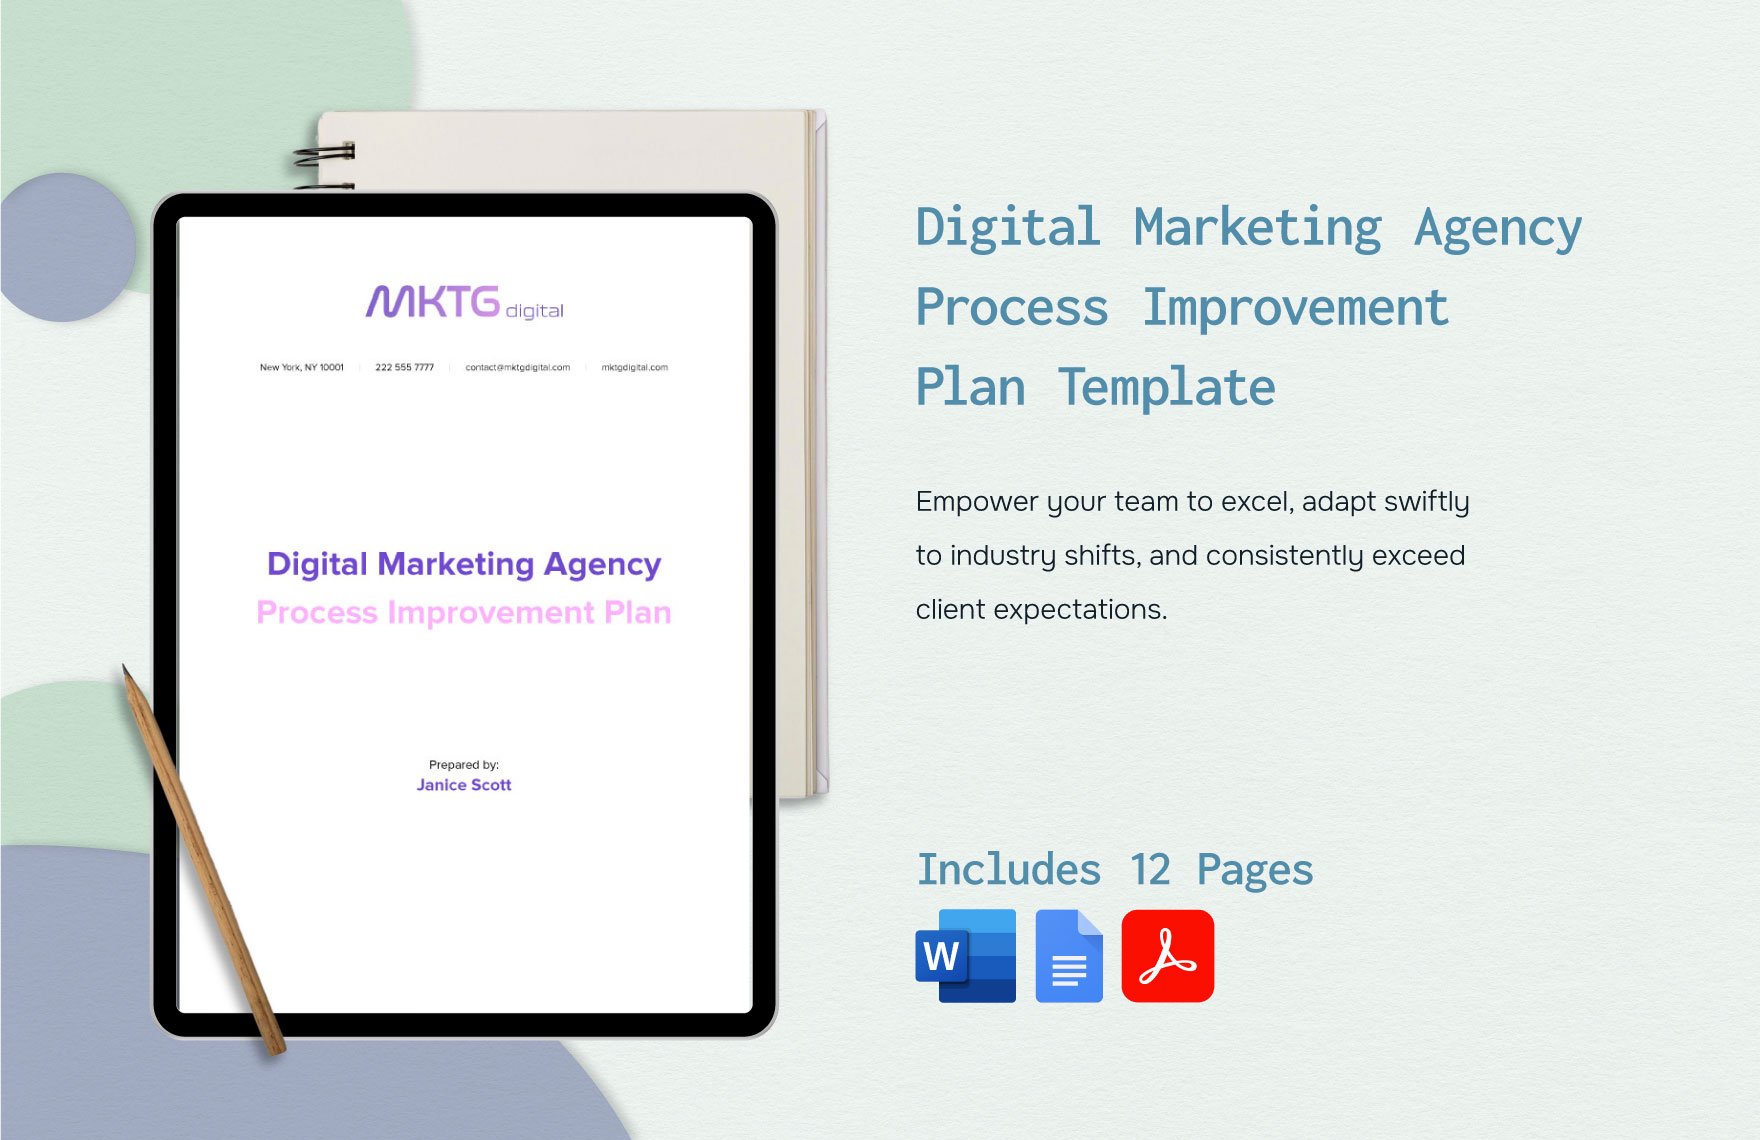 Digital Marketing Agency Process Improvement Plan Template